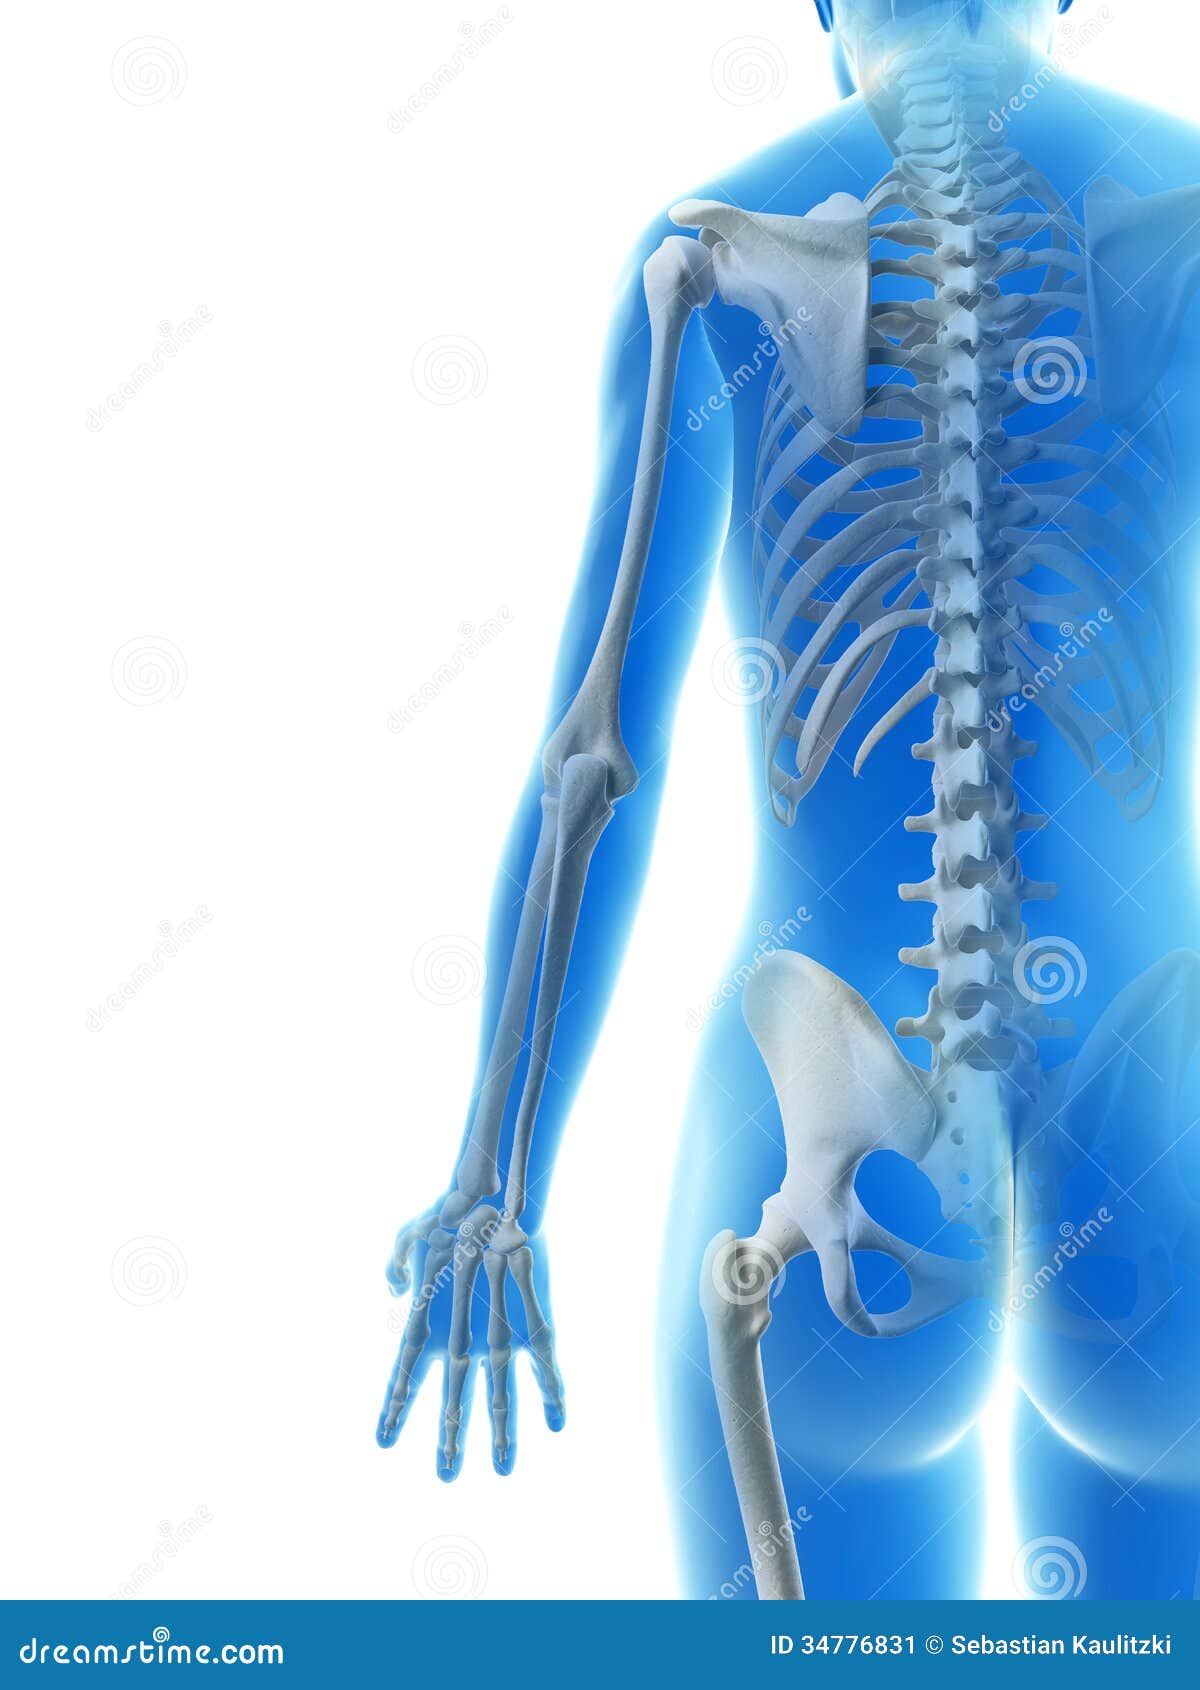 The Human Skeleton Stock Image - Image: 34776831